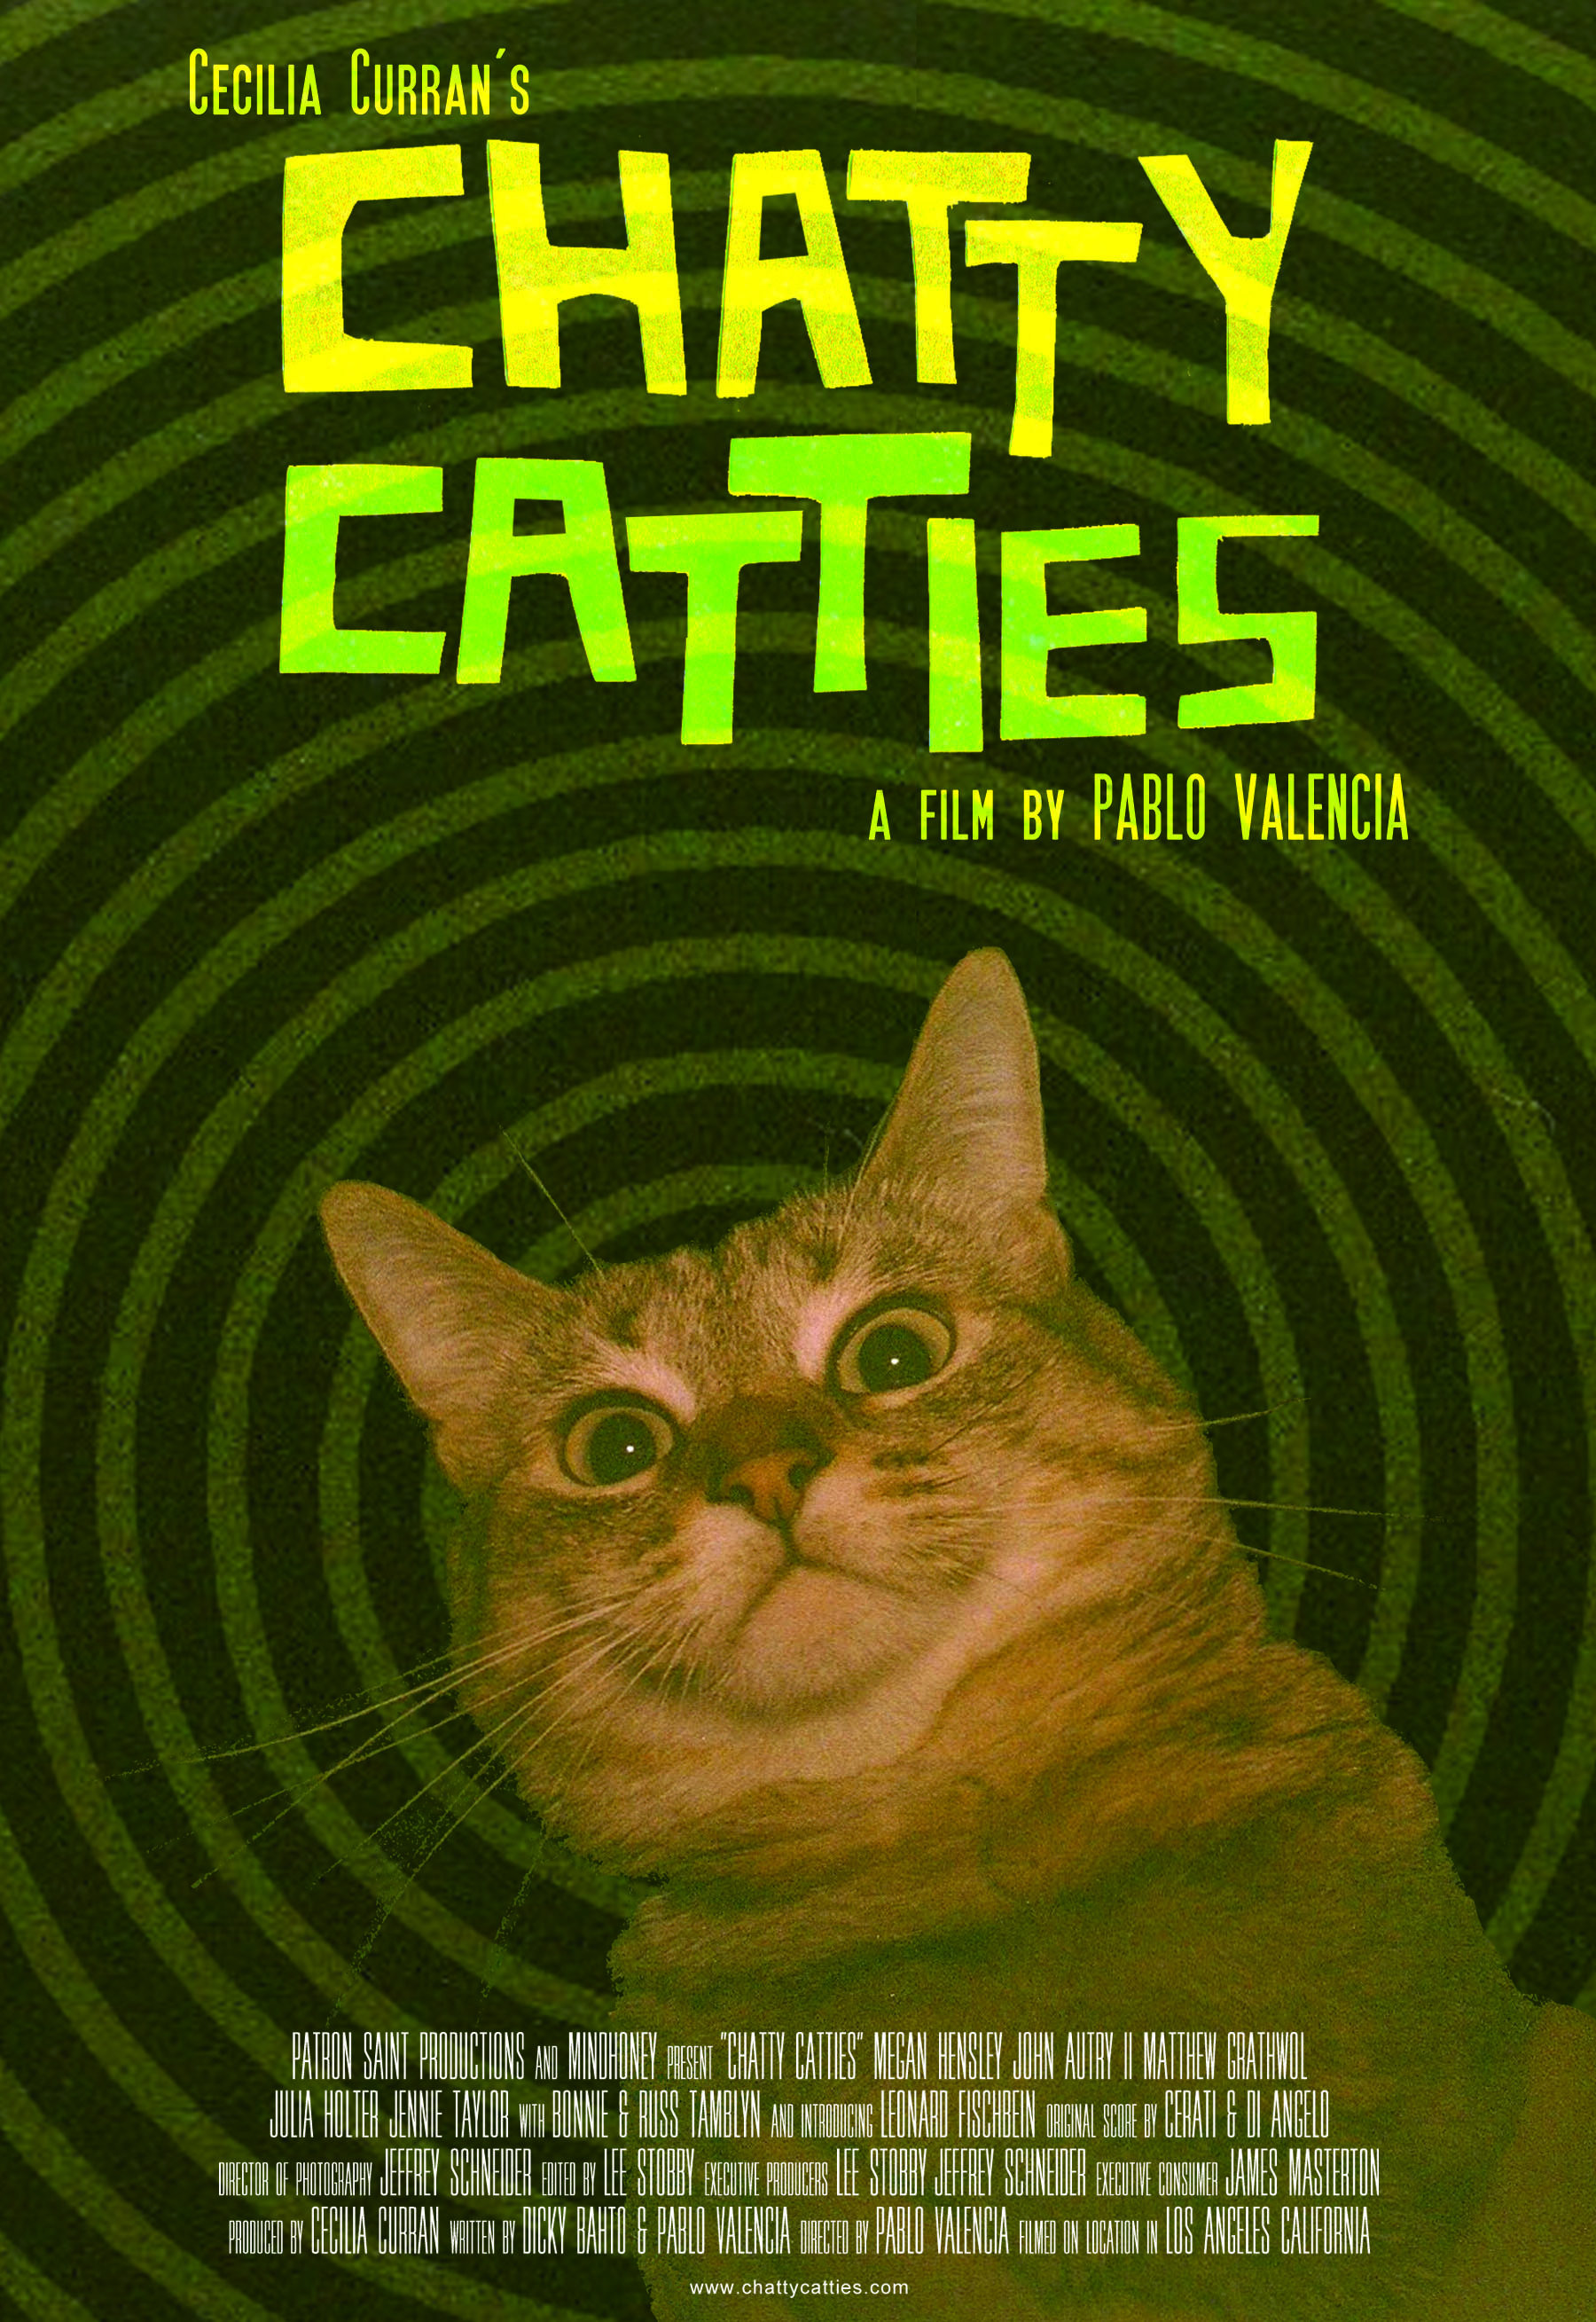 Chatty Catties (2015) starring Megan Hensley on DVD on DVD